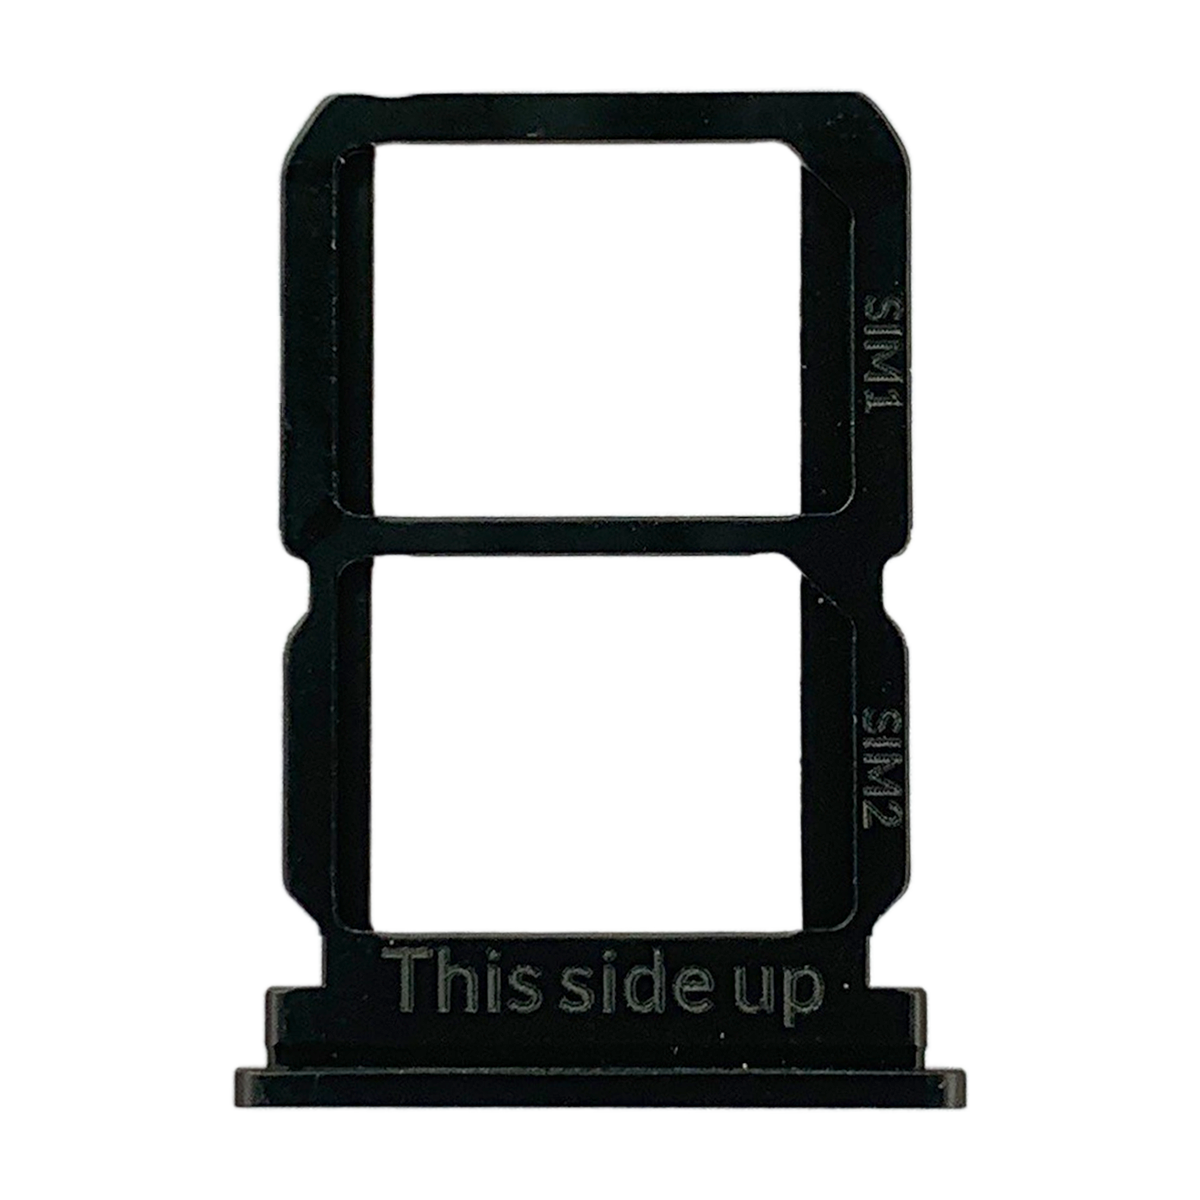 OnePlus 5T (A5010) SIM CARD Tray